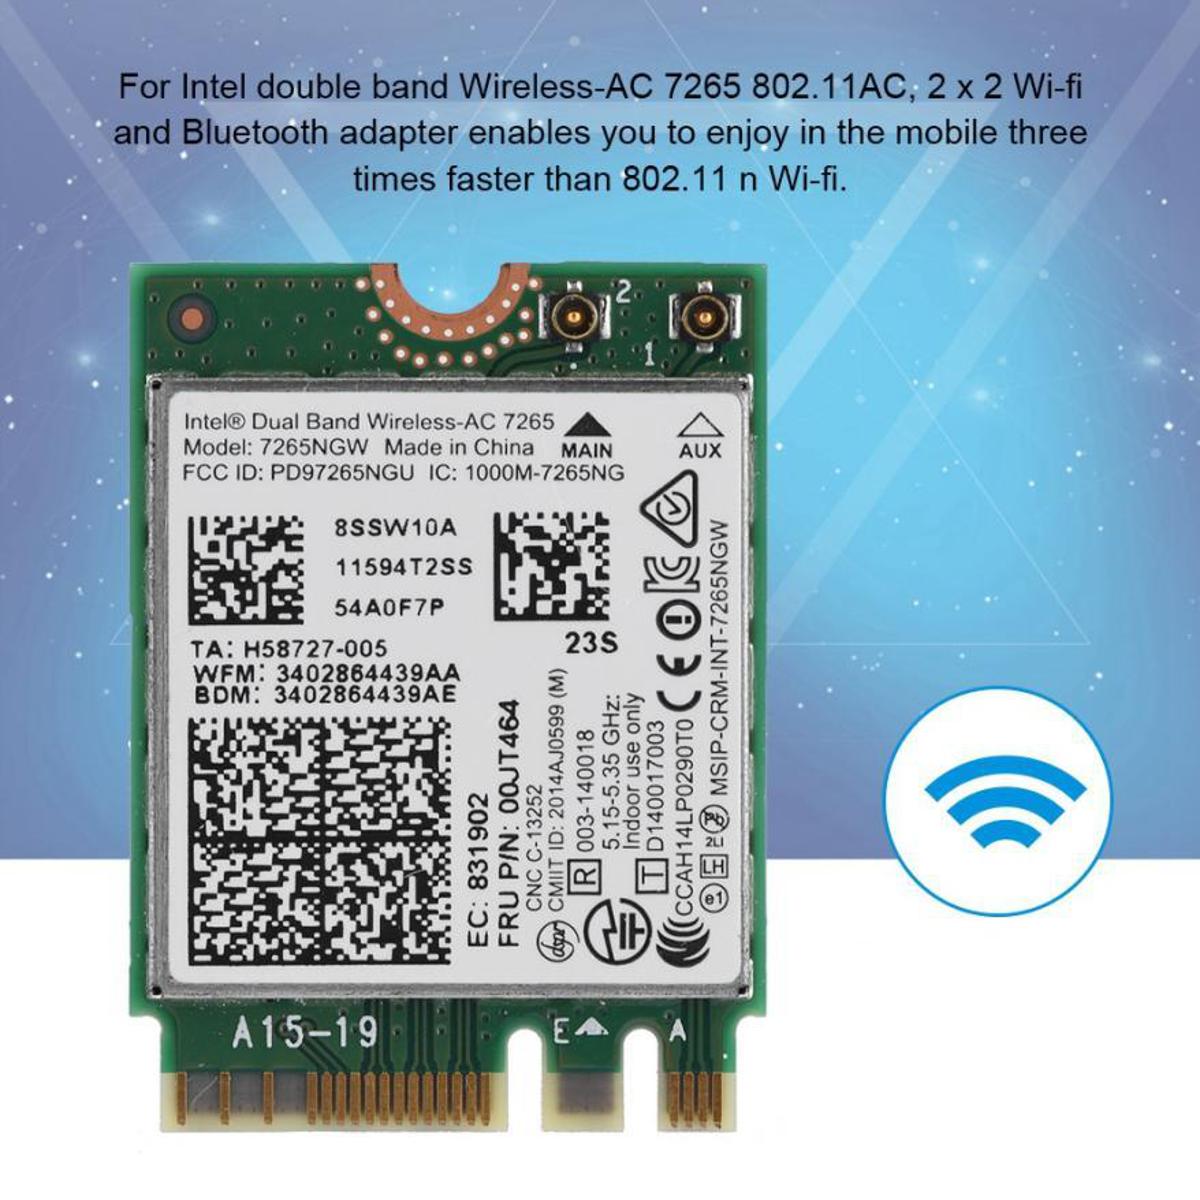 Блютуз интел. Dual Band Wireless-AC 7265. Bluetooth+Wi-Fi адаптер Intel 3165ngw. Intel Dual Band Wireless-AC 7265 Bluetooth. Intel(r) Dual Band Wireless-AC 3165.